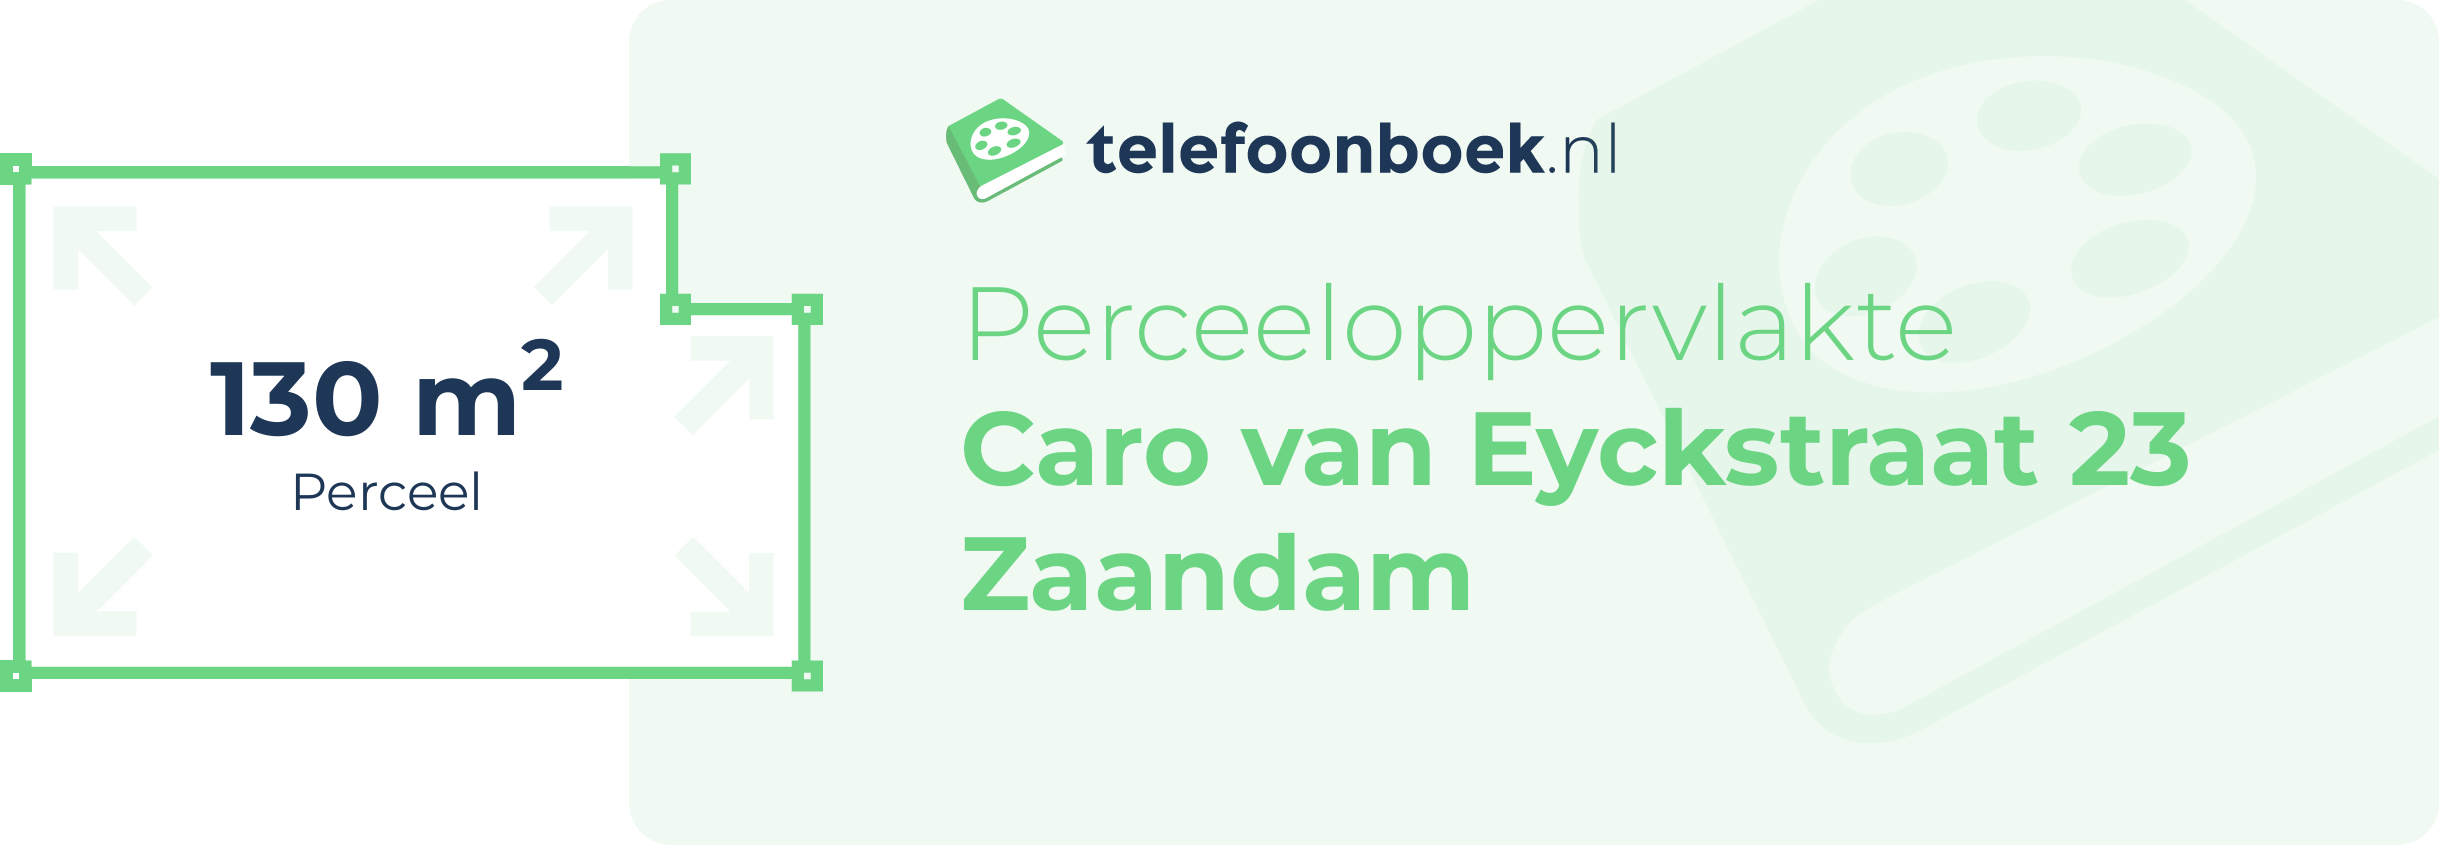 Perceeloppervlakte Caro Van Eyckstraat 23 Zaandam